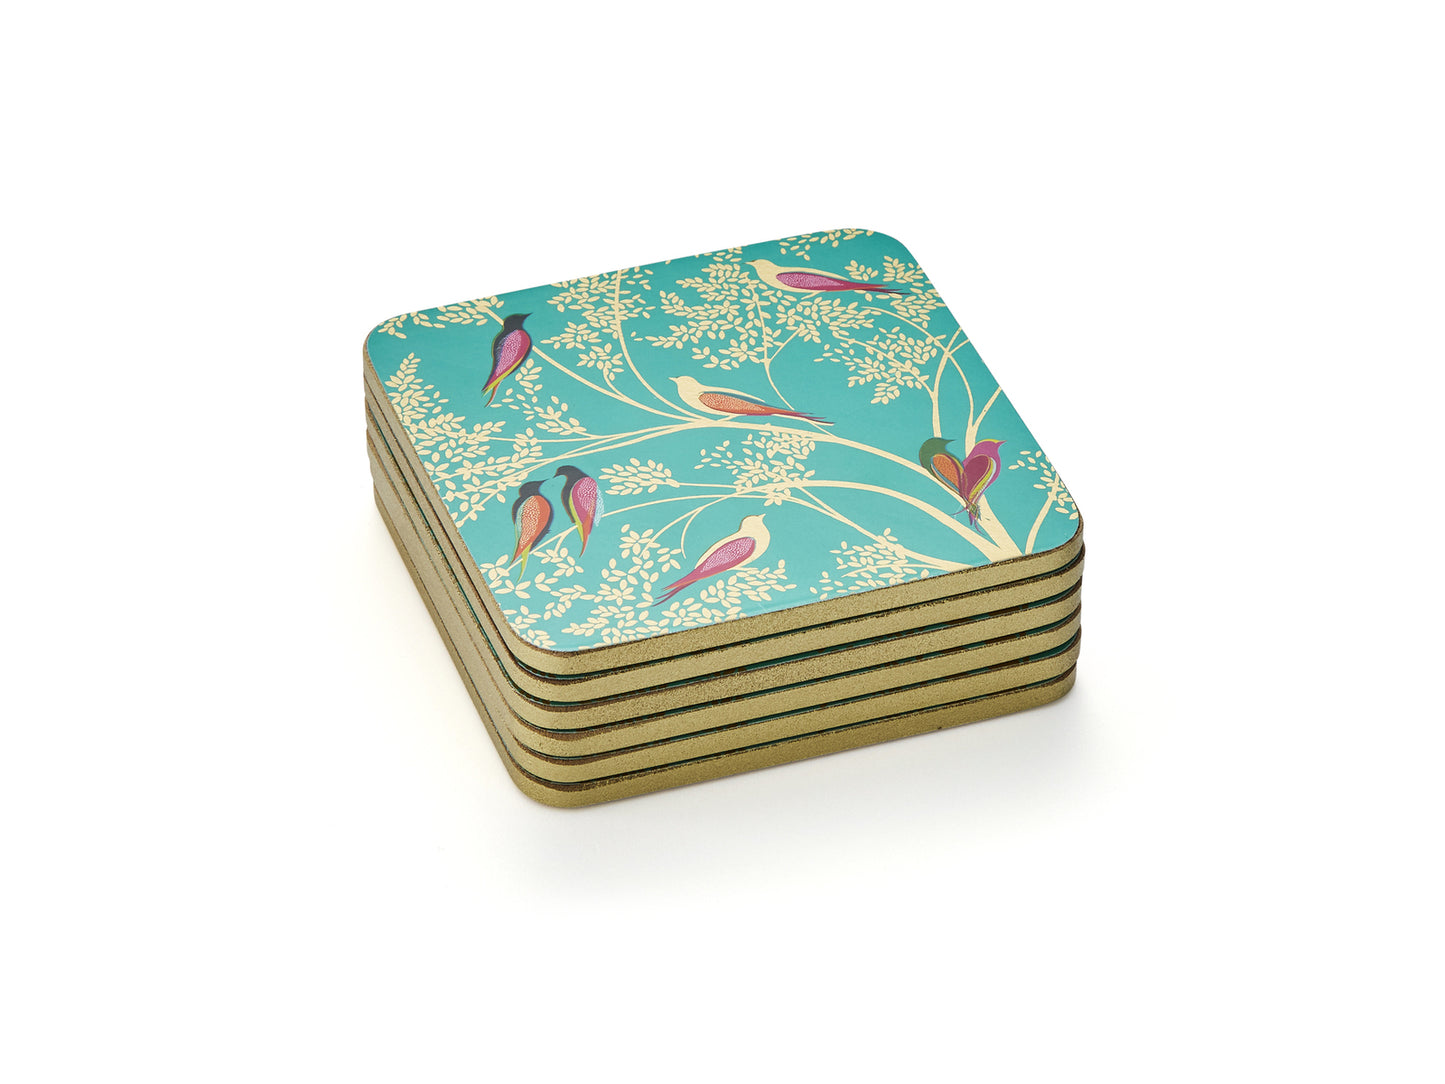 Sara Miller London Chelsea Collection Coasters - Set of 6 (Green Birds)